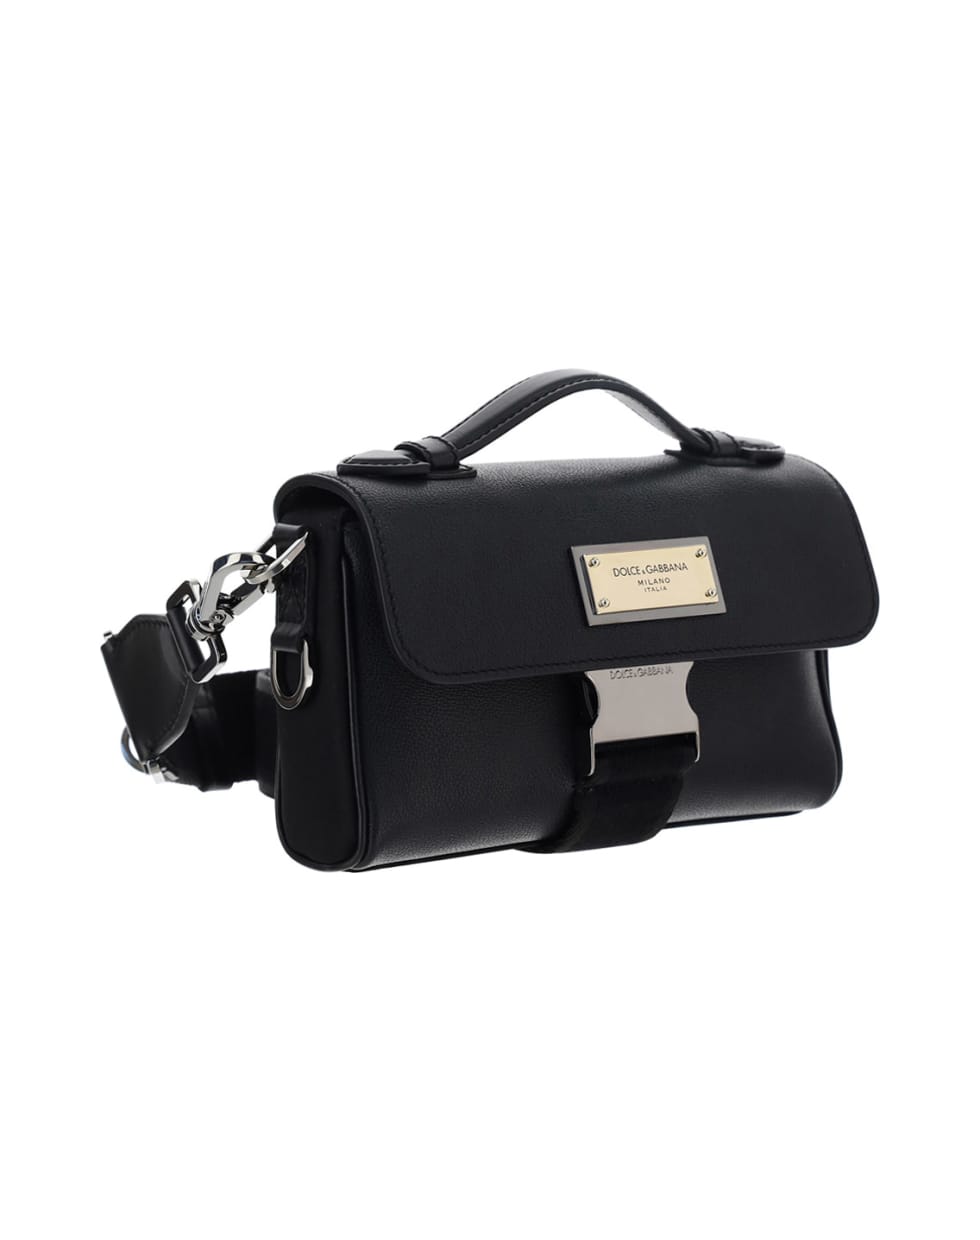 Dolce & Gabbana Shoulder Bag - Nero/nero